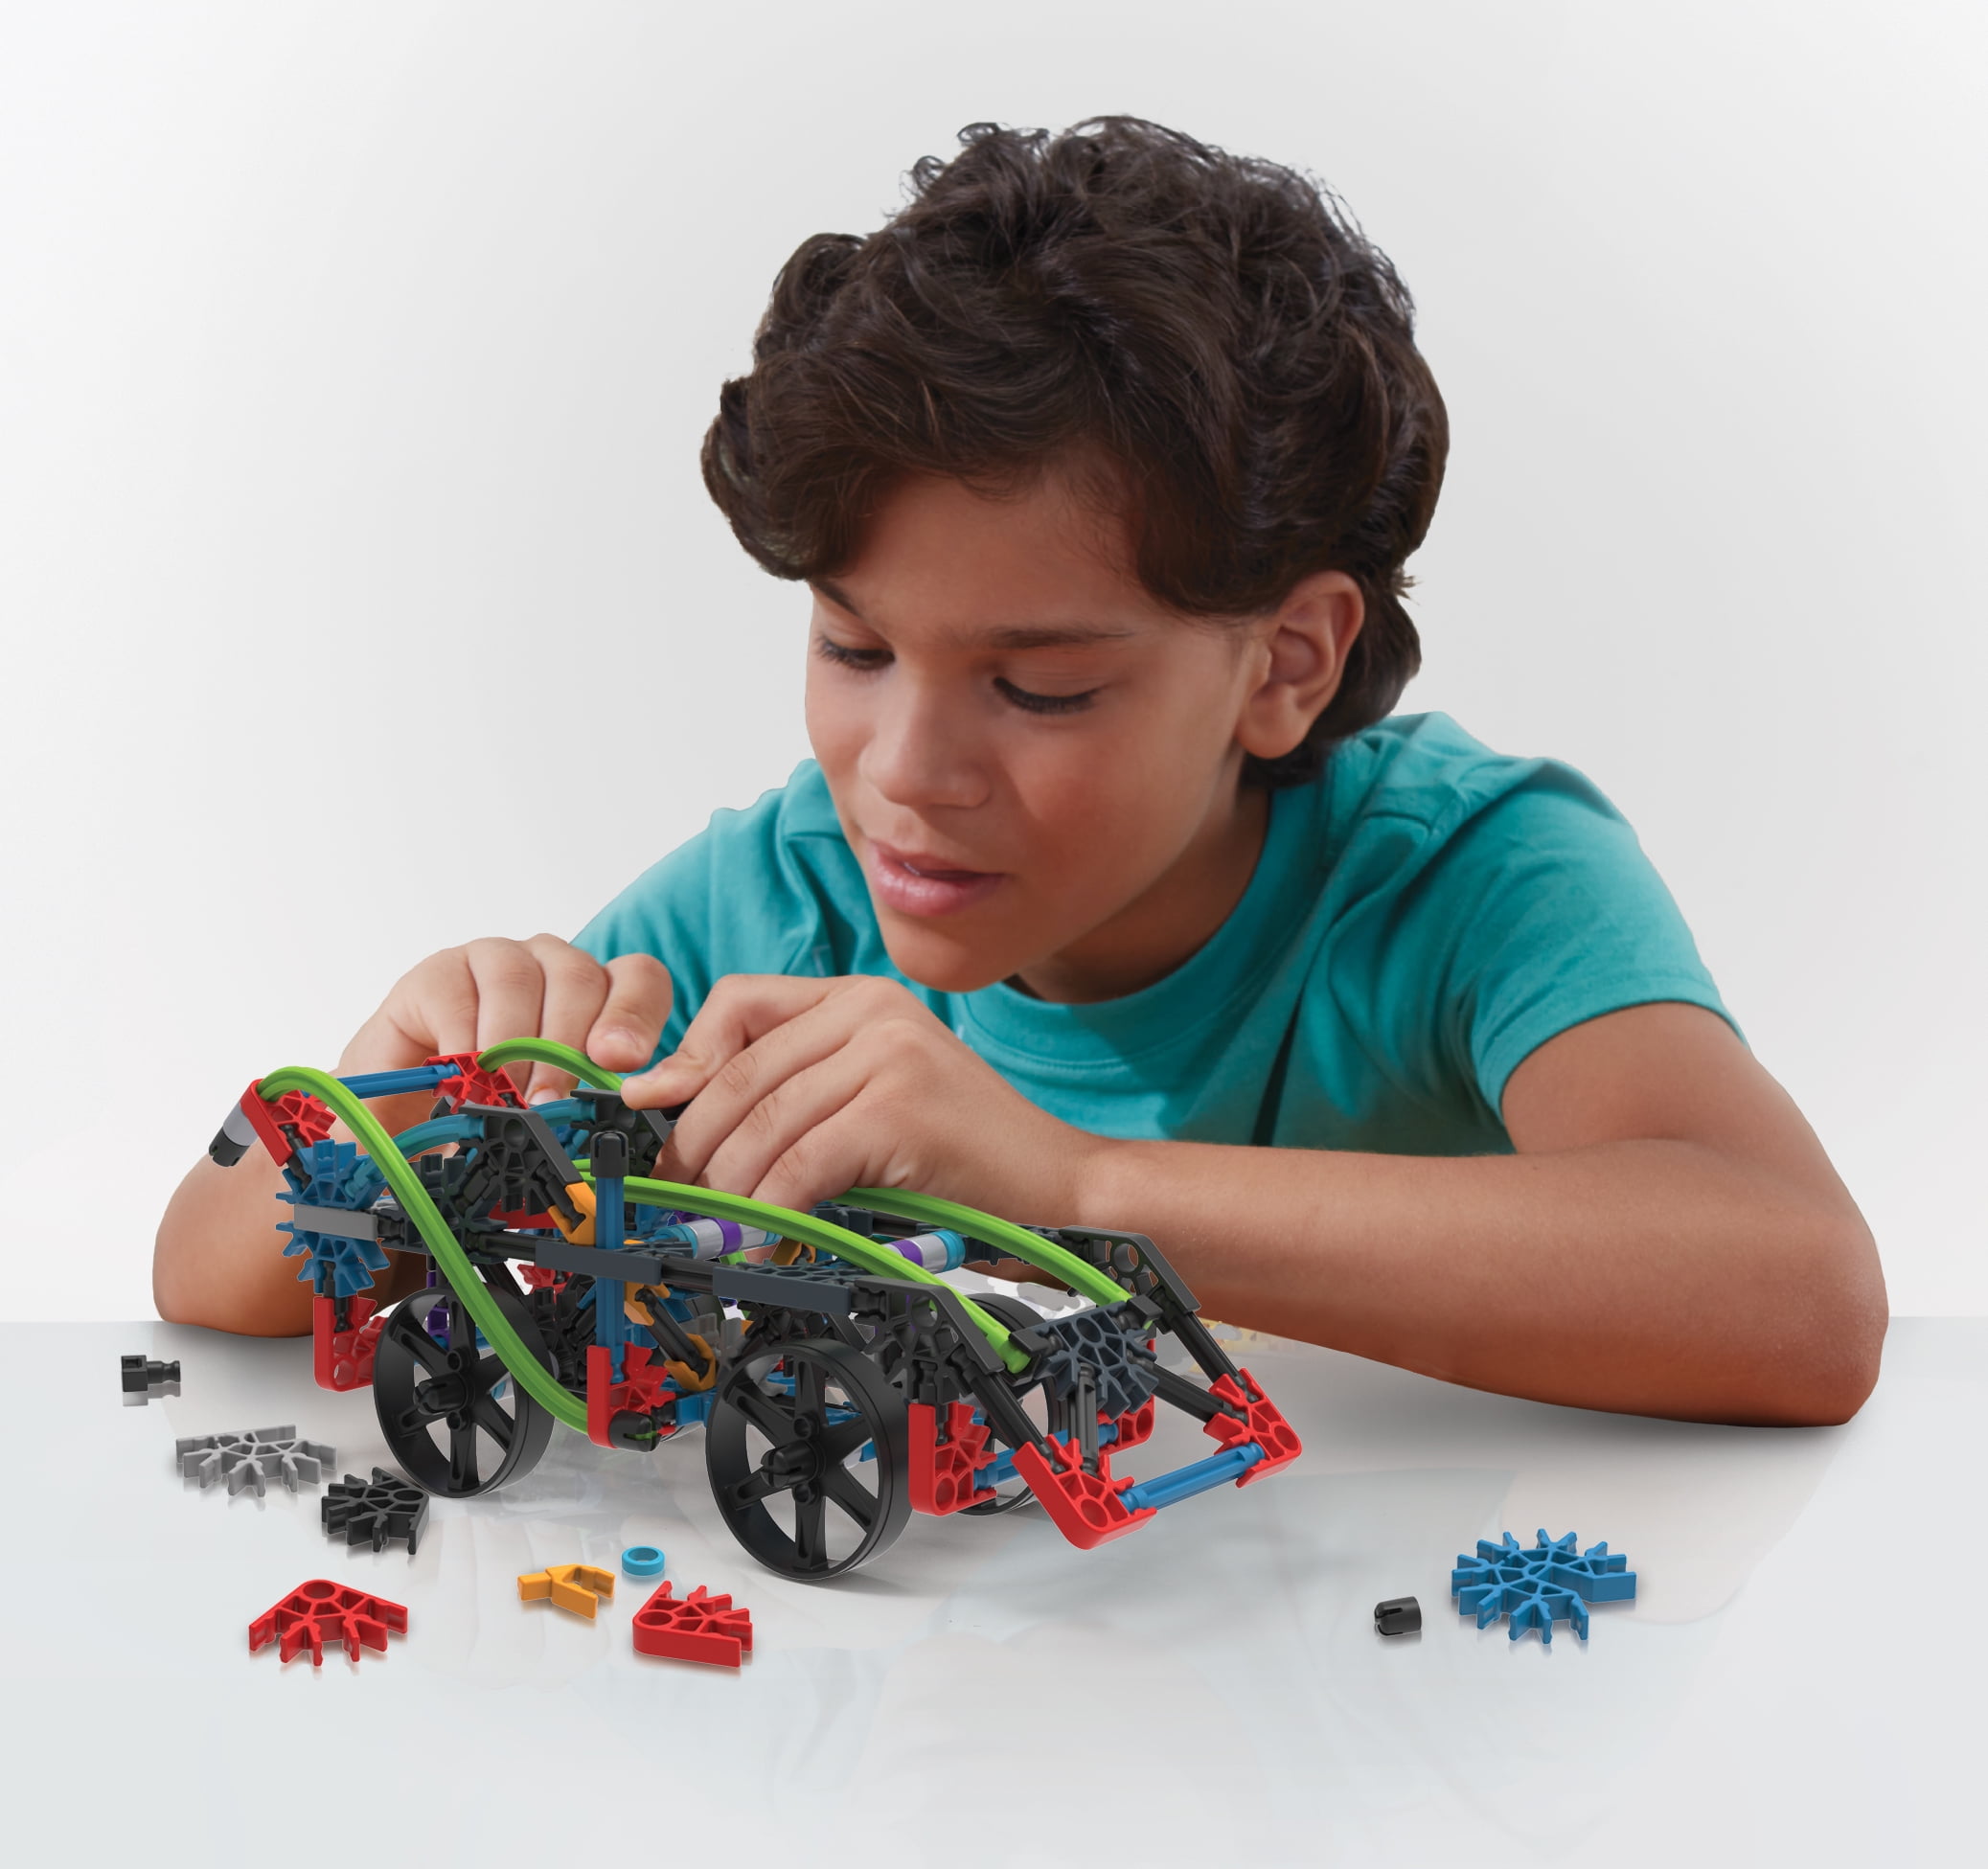 K'Nex Rad Rides 12 N 1 Building Set Engineering Educational Construction Toy 